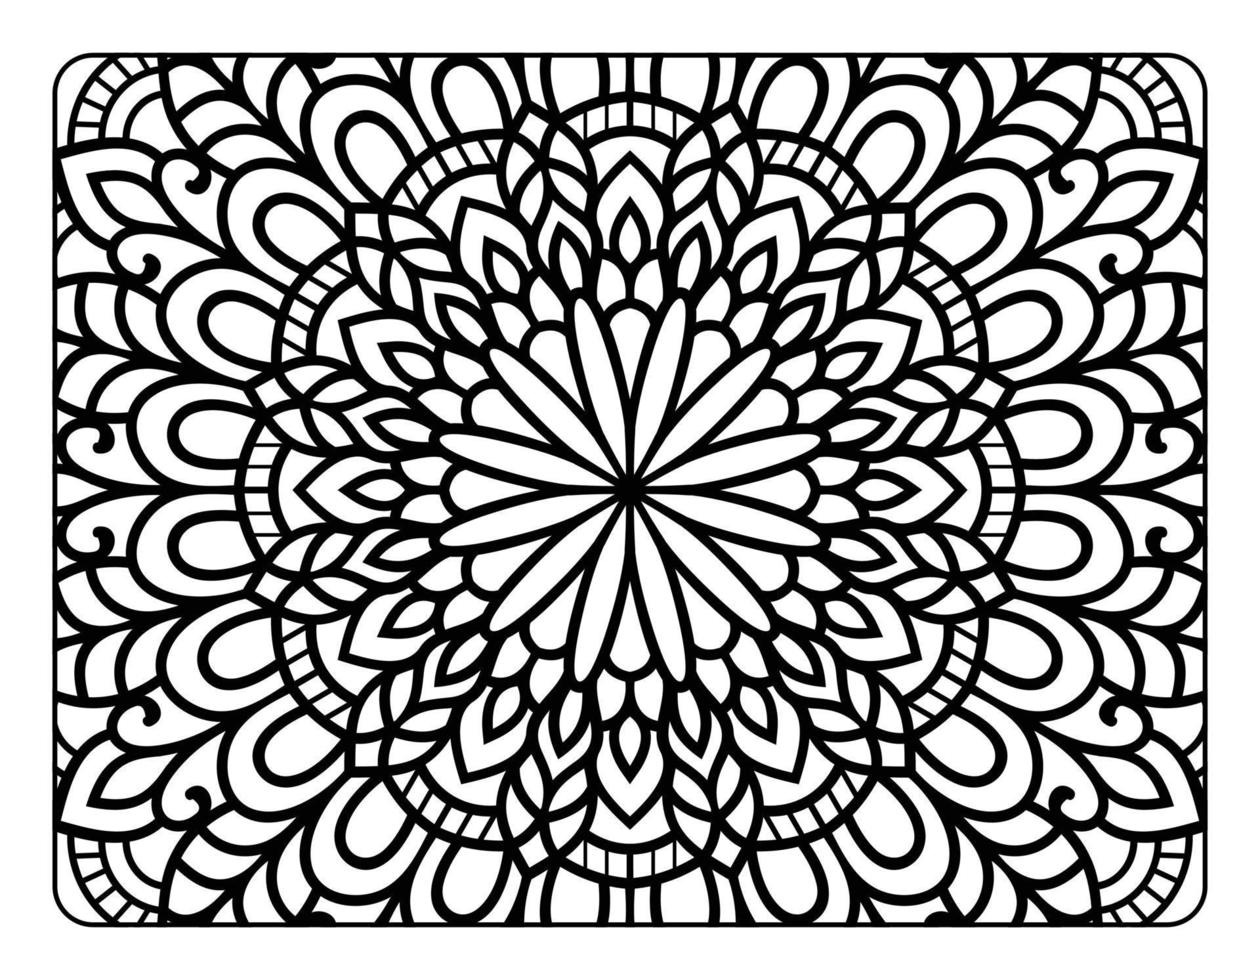 Adult mandala coloring page for relaxation, coloring page for adult, coloring book page with floral mandala pattern art vector